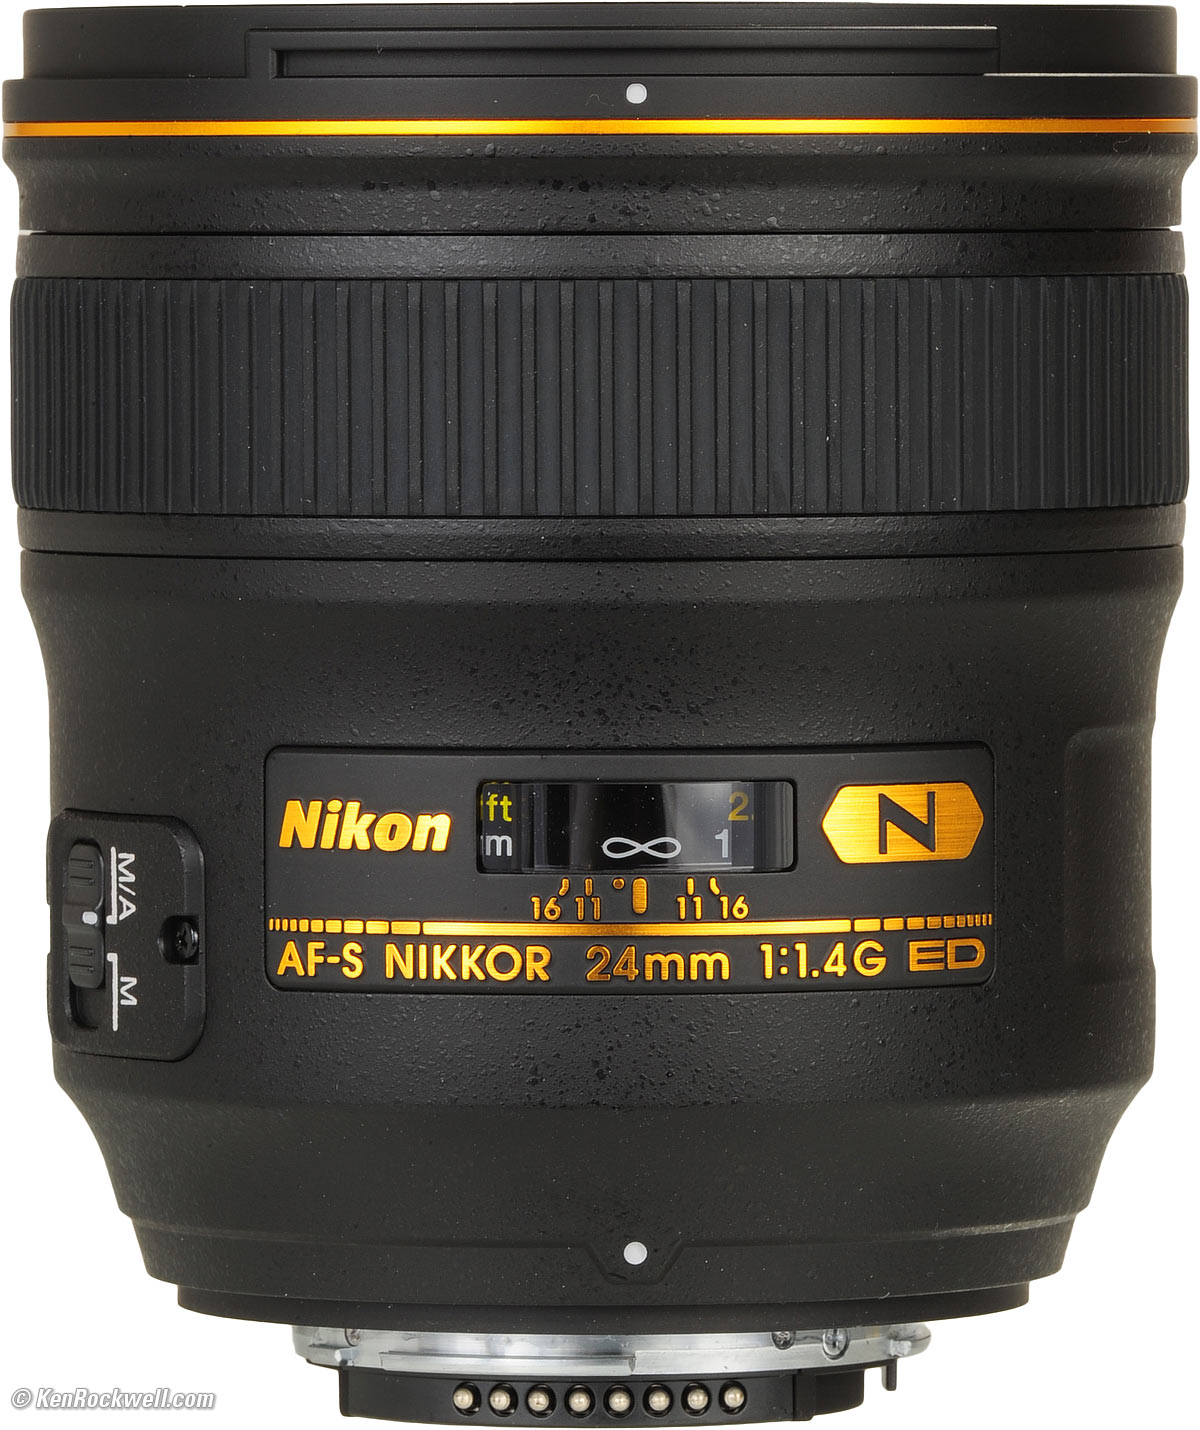 Nikon 24mm f/1.4